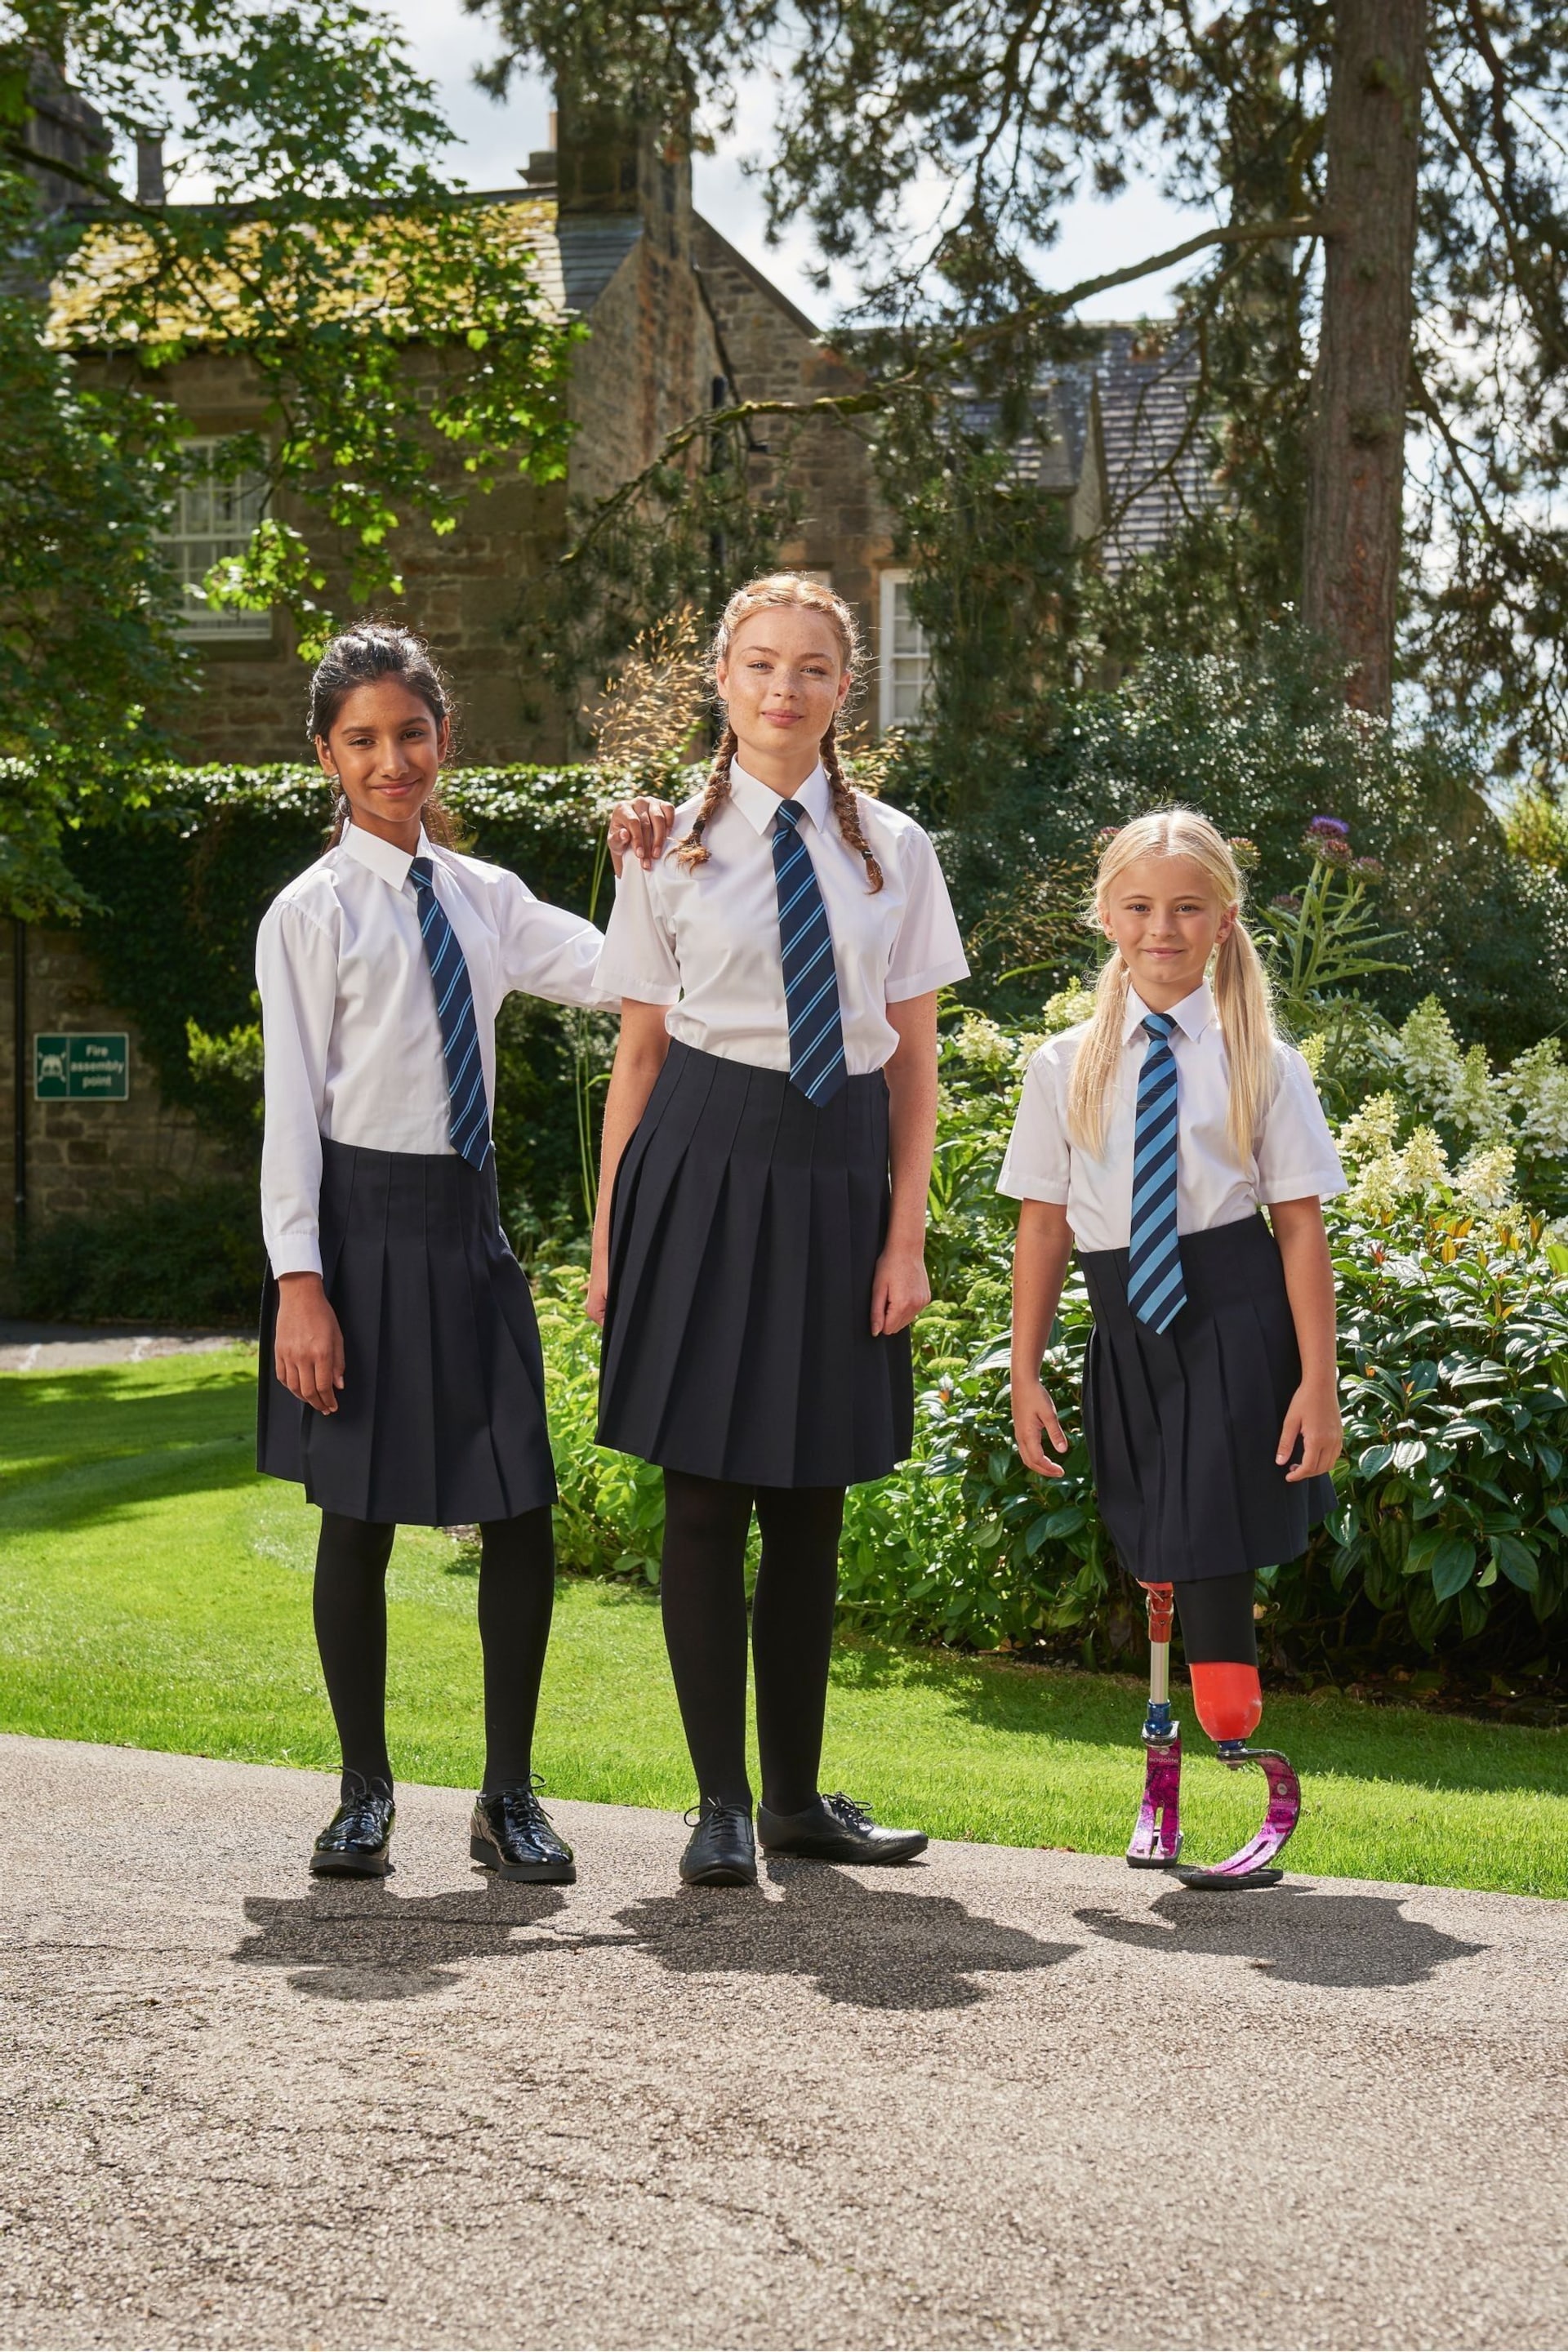 Trutex Girls Permanent Pleats School Skirt - Image 2 of 3